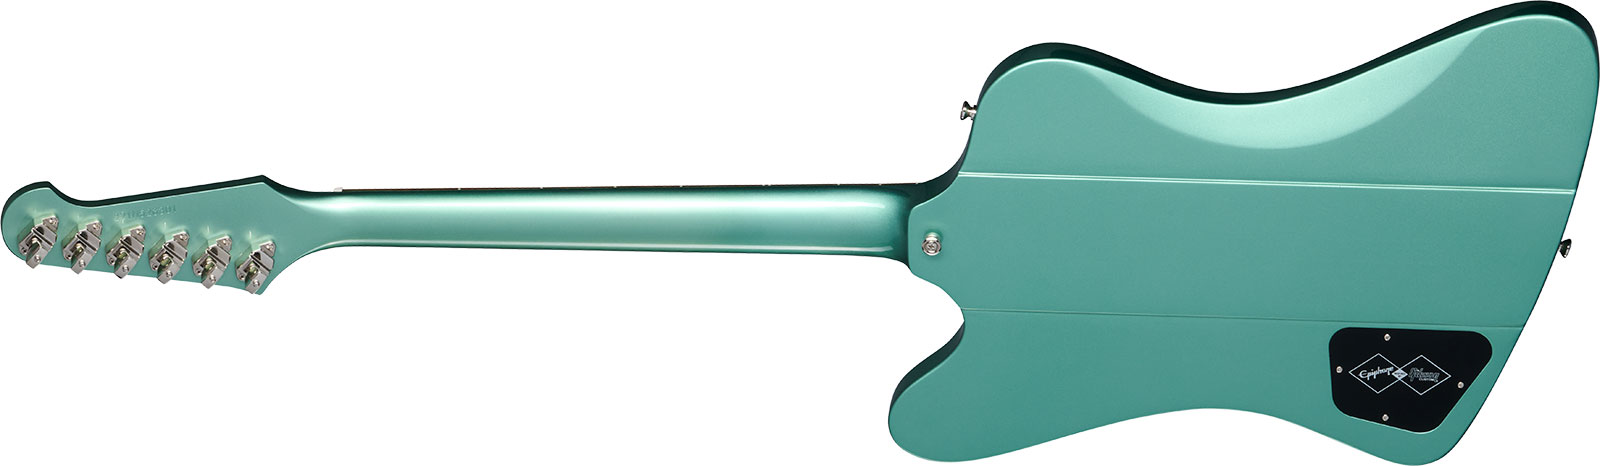 Epiphone Firebird I 1963 Inspired By Gibson Custom 1mh Ht Lau - Inverness Green - Retro-rock elektrische gitaar - Variation 1